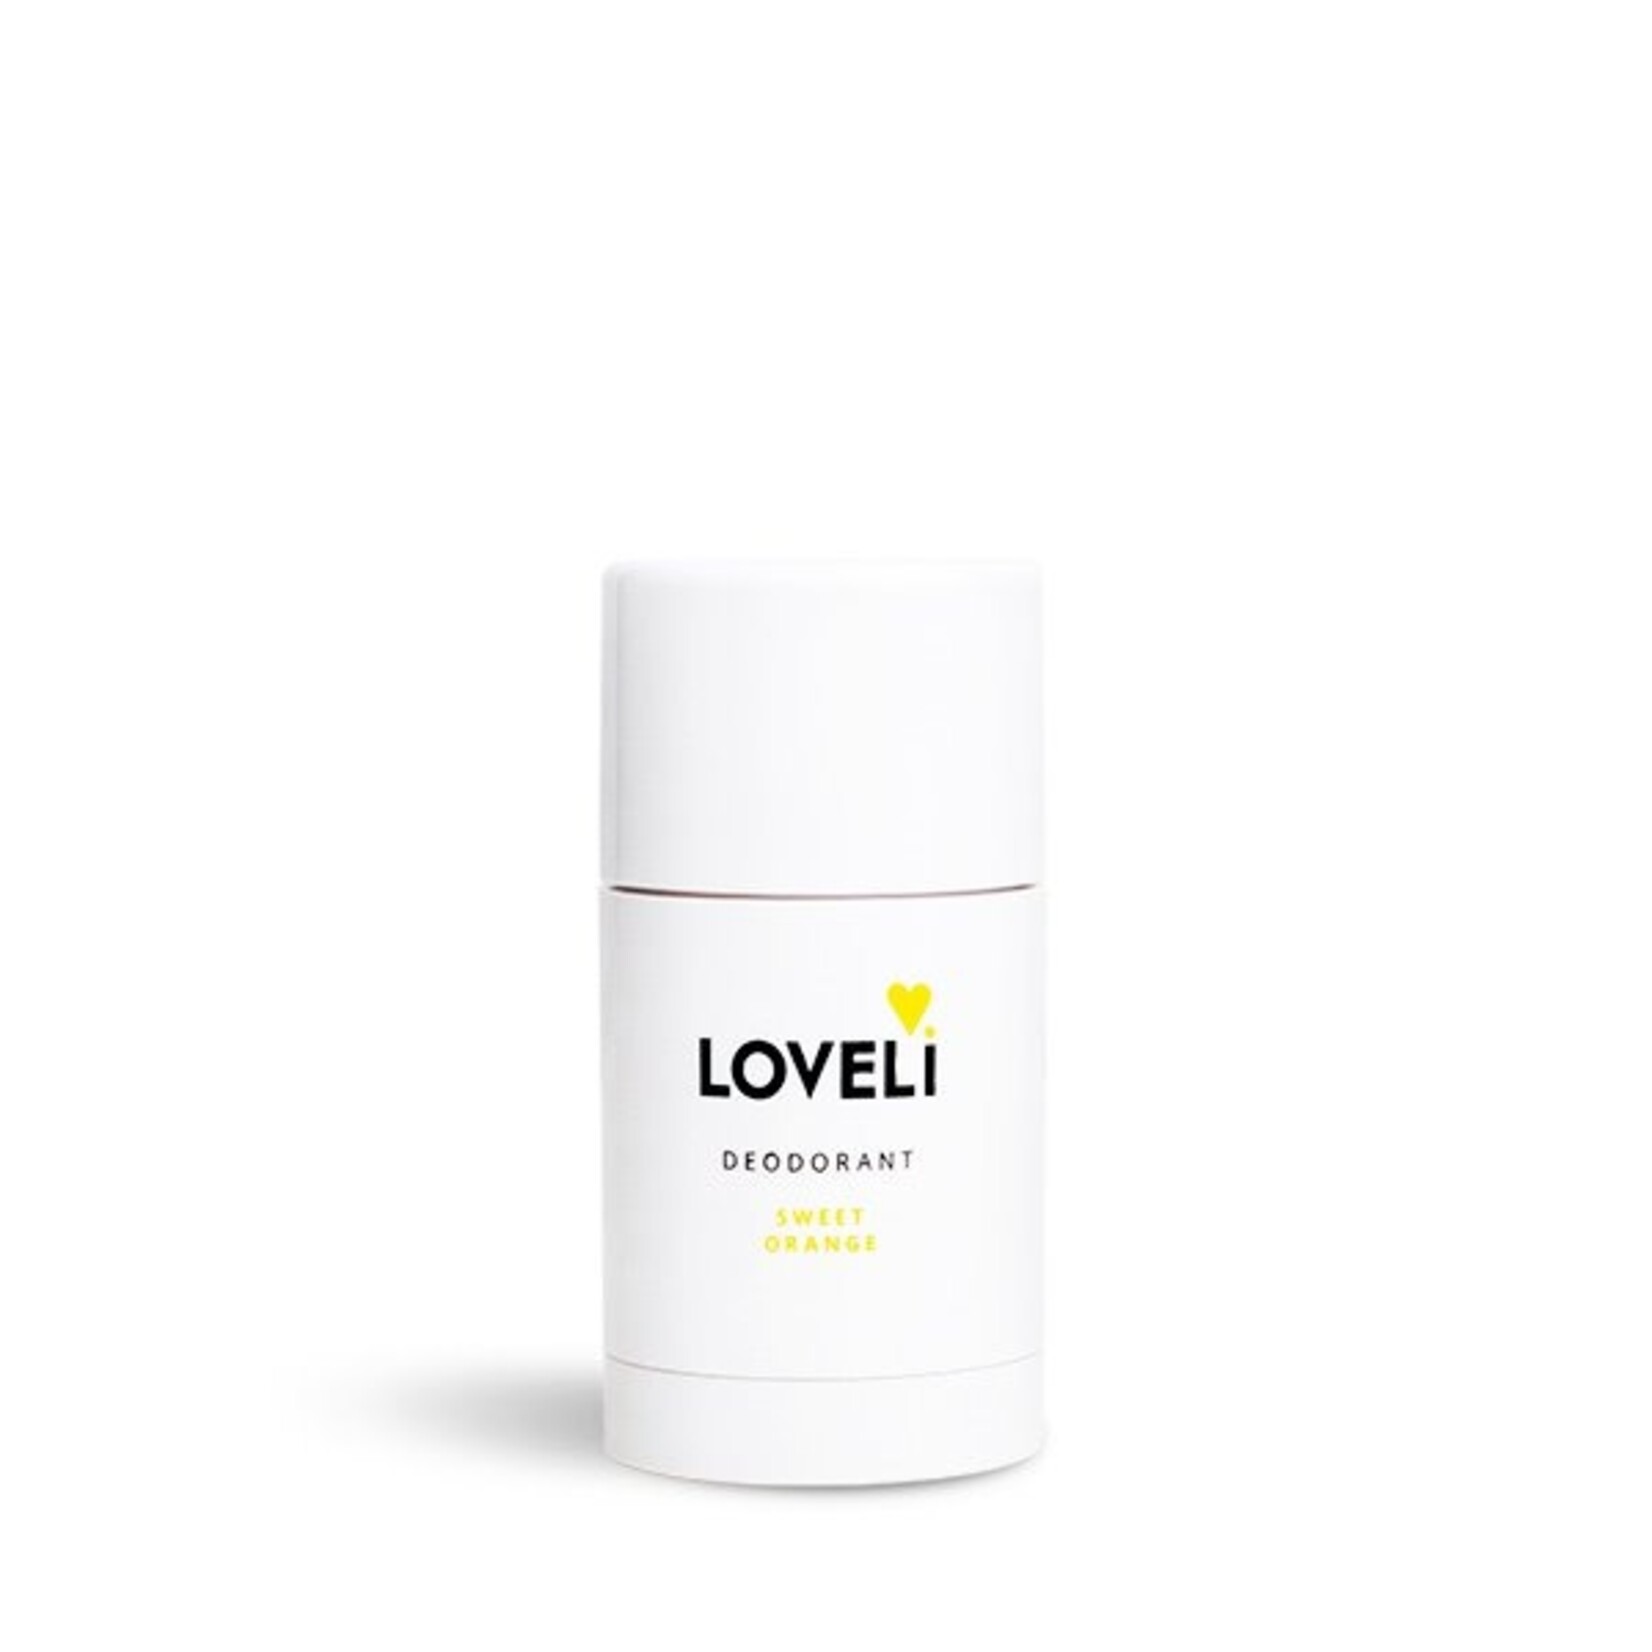 Loveli Deodorant - 30 mL